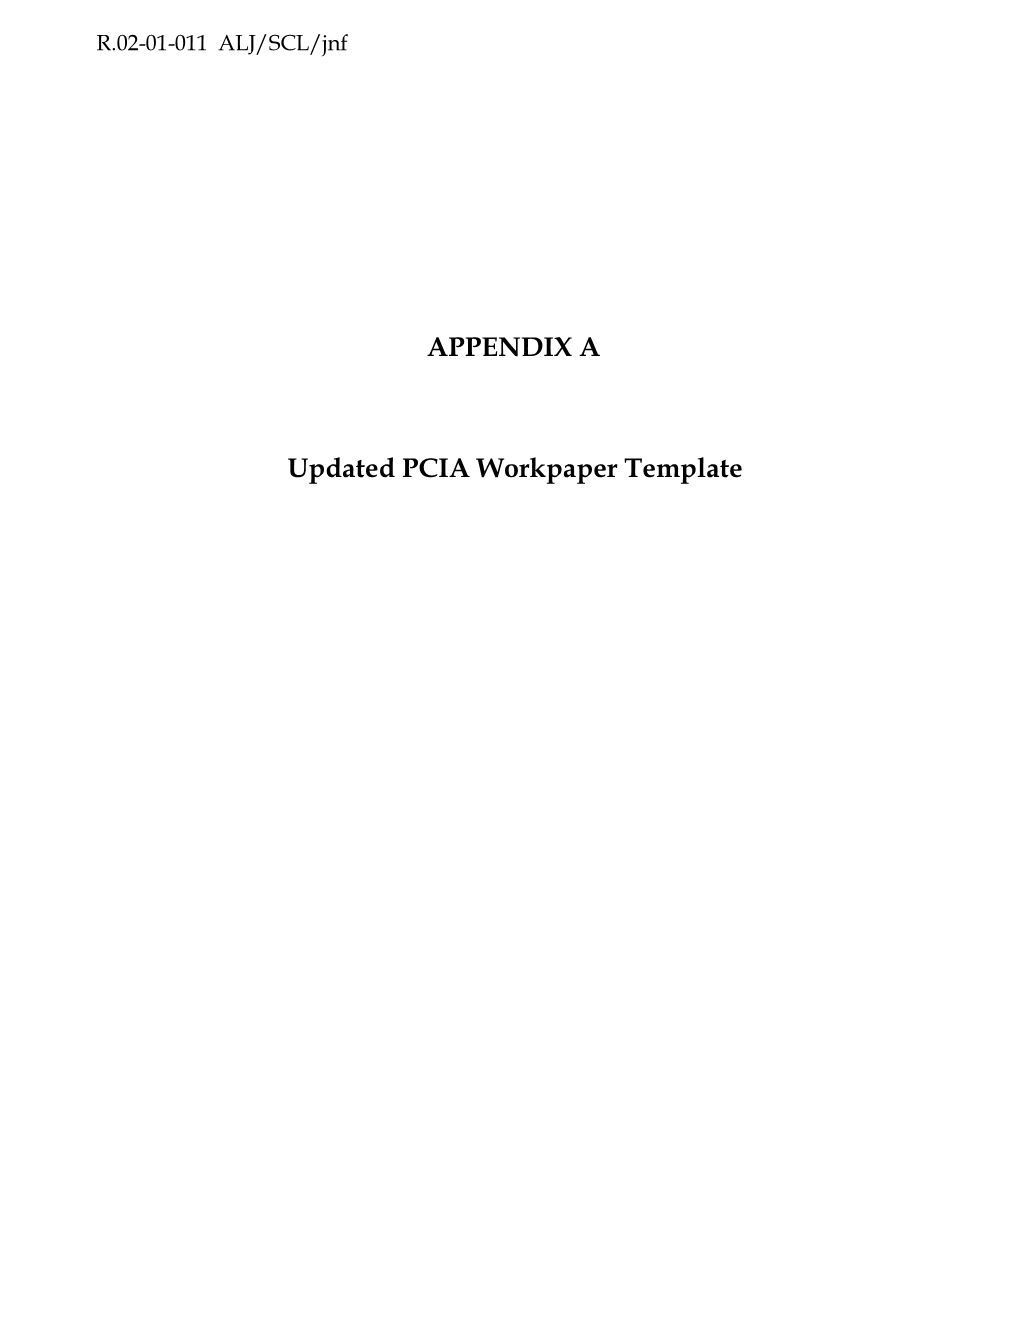 APPENDIX a Updated PCIA Workpaper Template